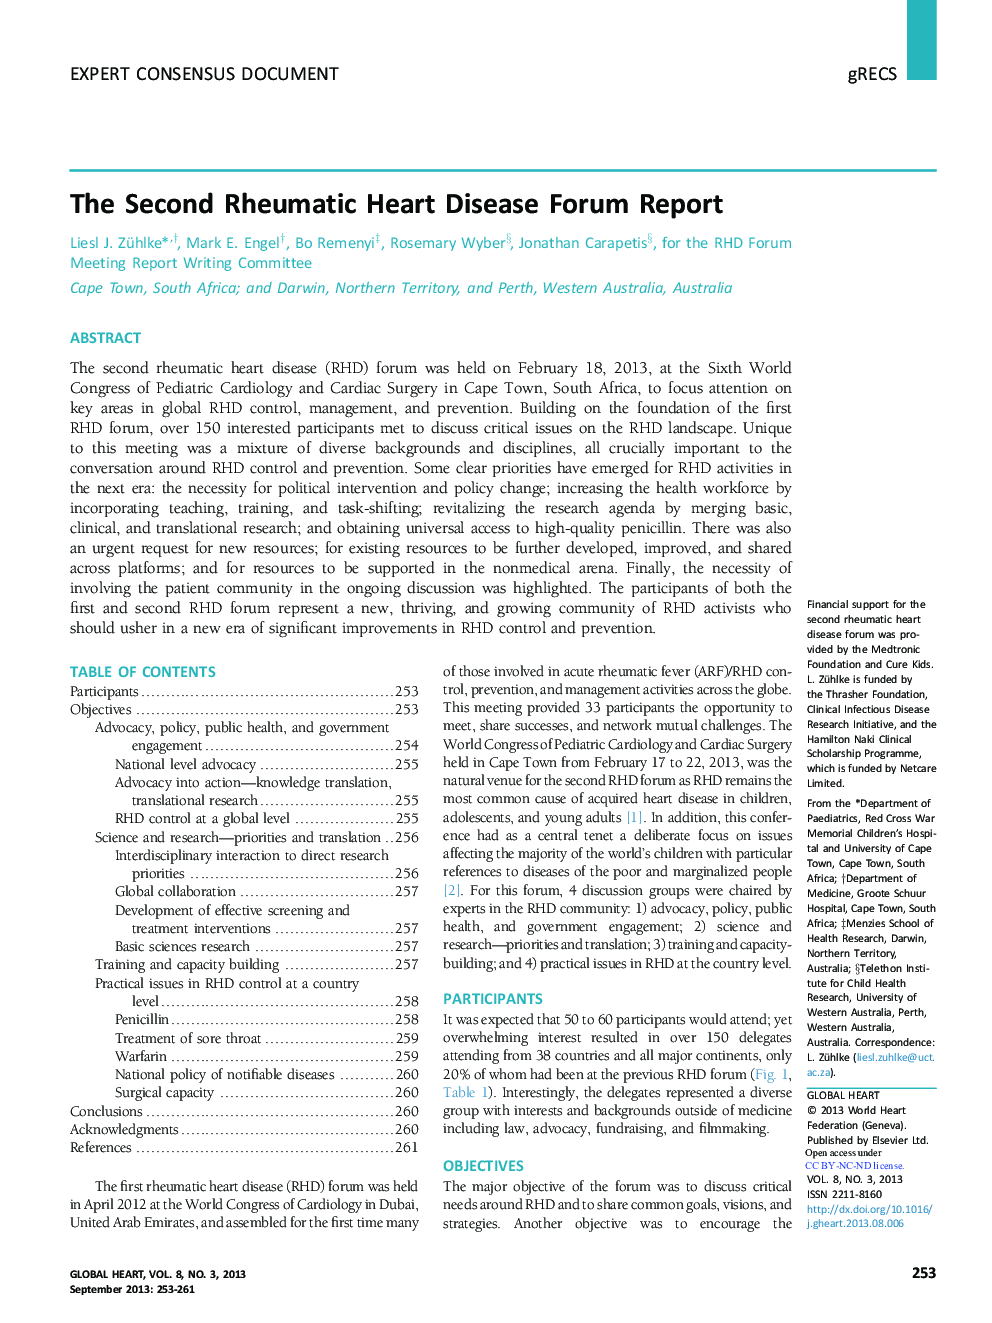 The Second Rheumatic Heart Disease Forum Report